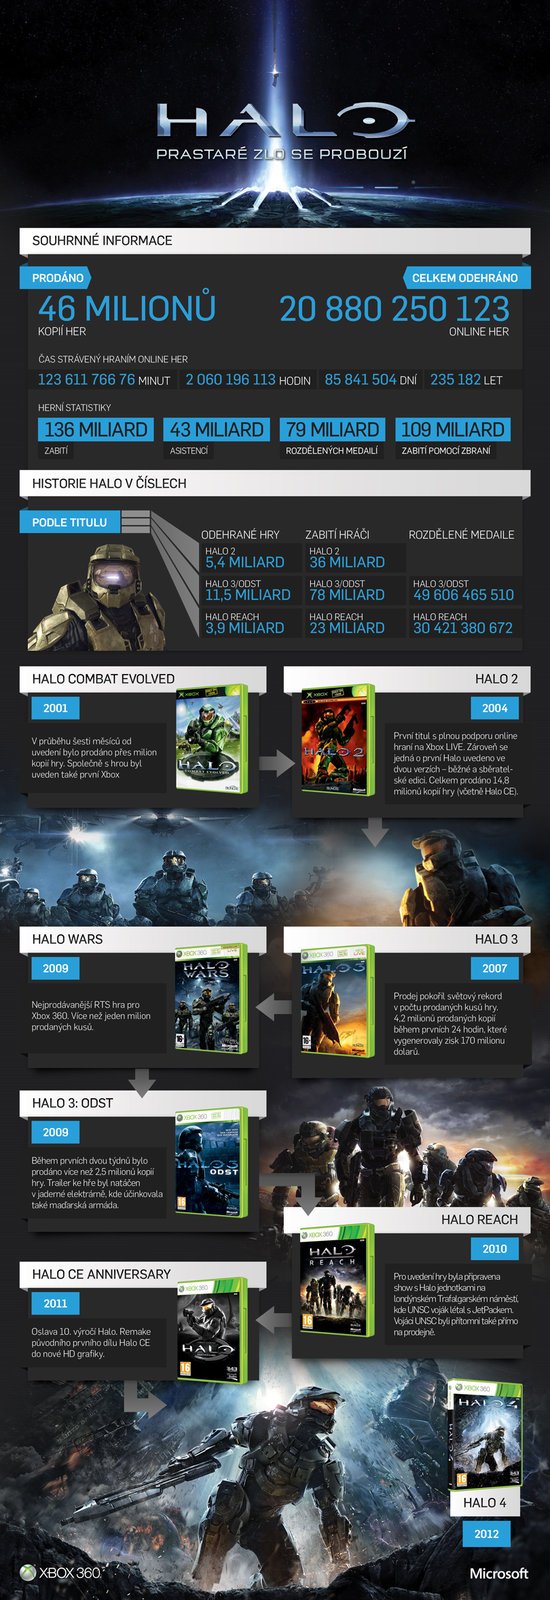 Tak šel čas se sérií Halo